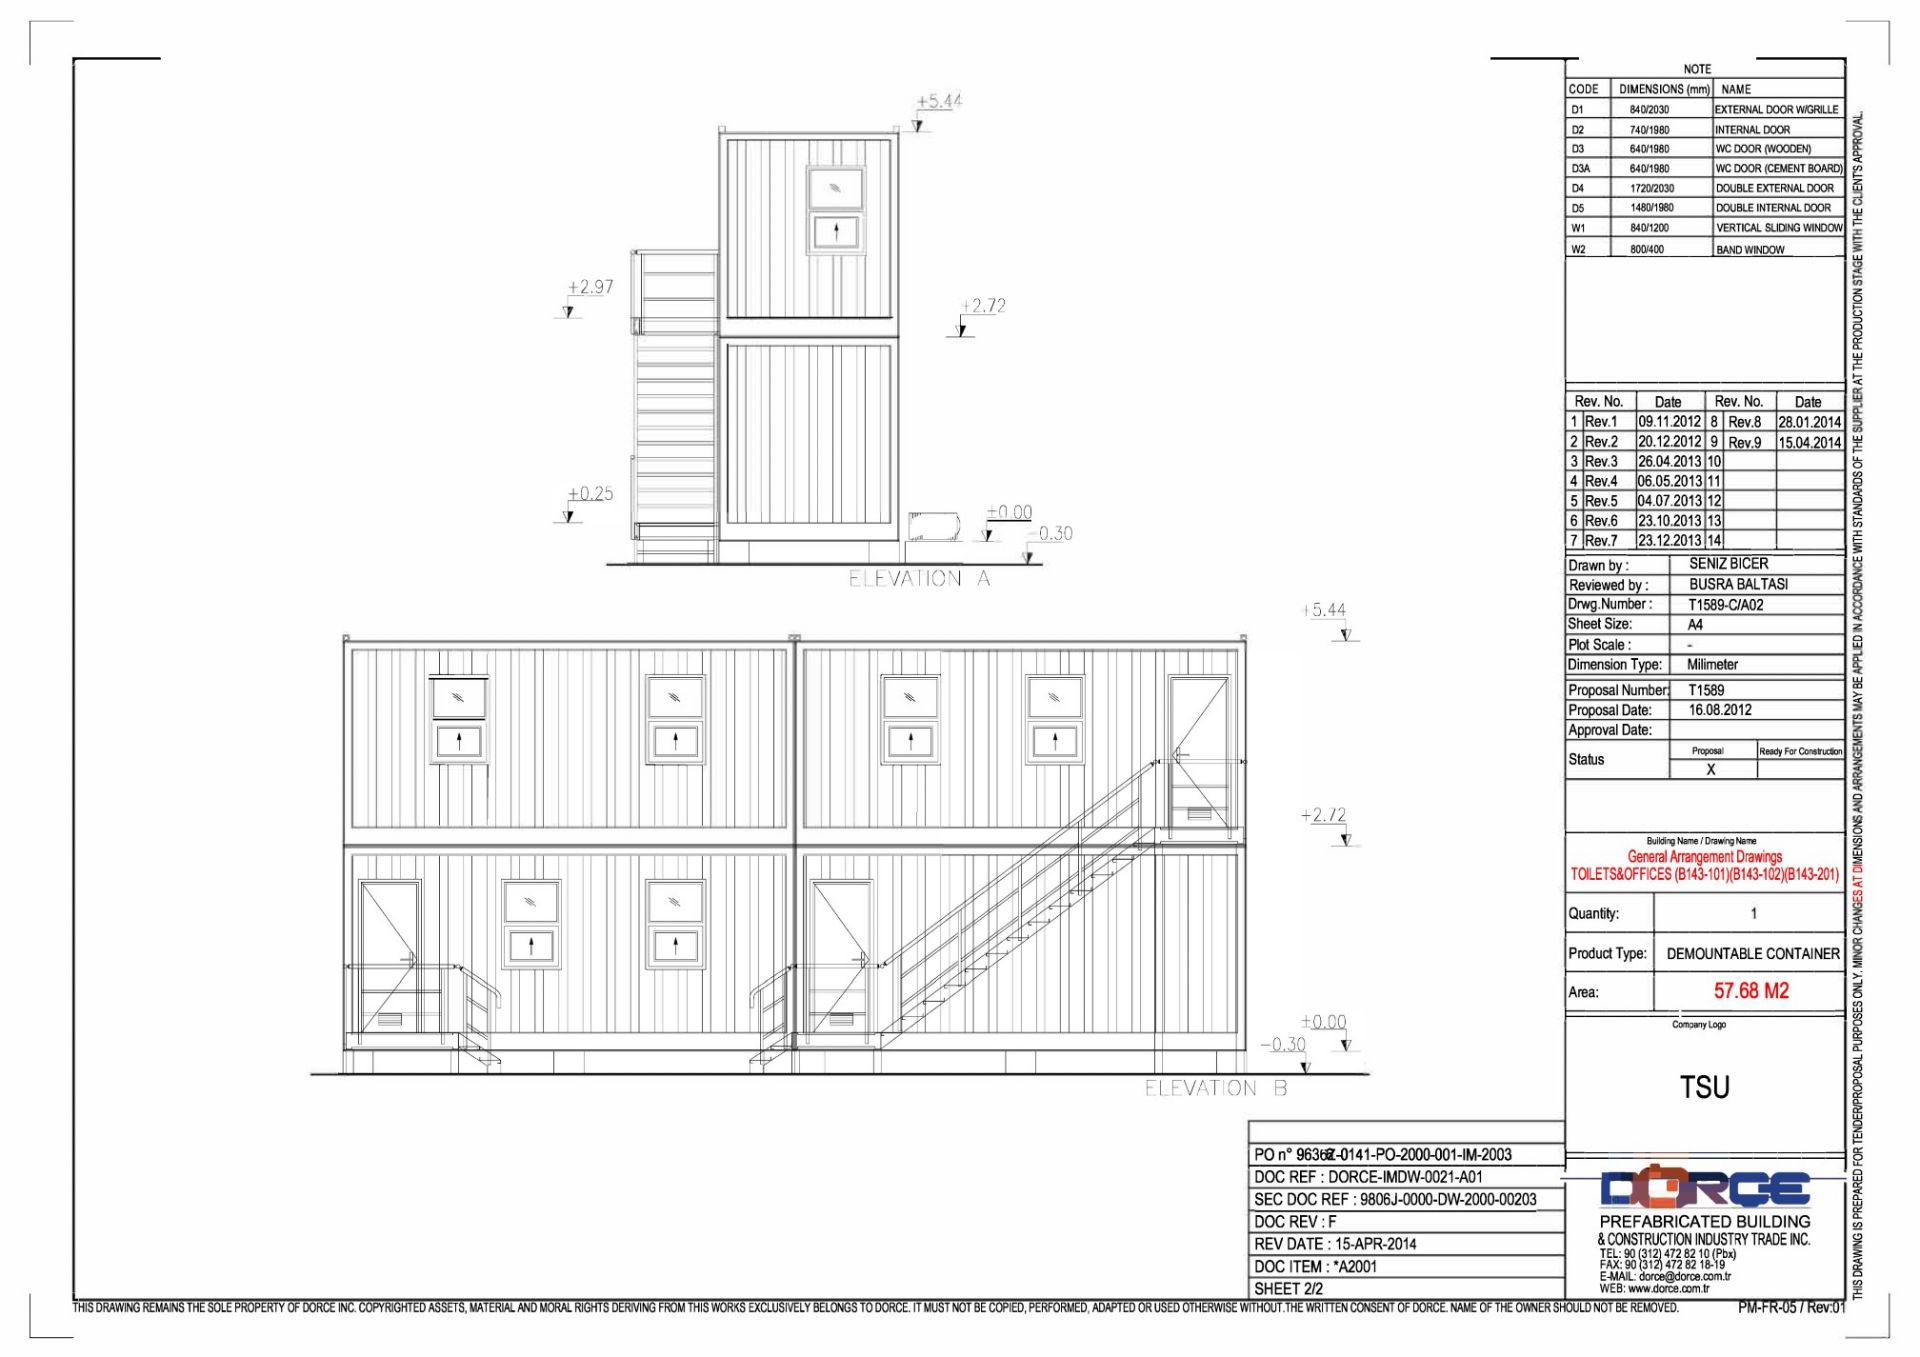 Dorce Modular Office Complex - Image 16 of 75